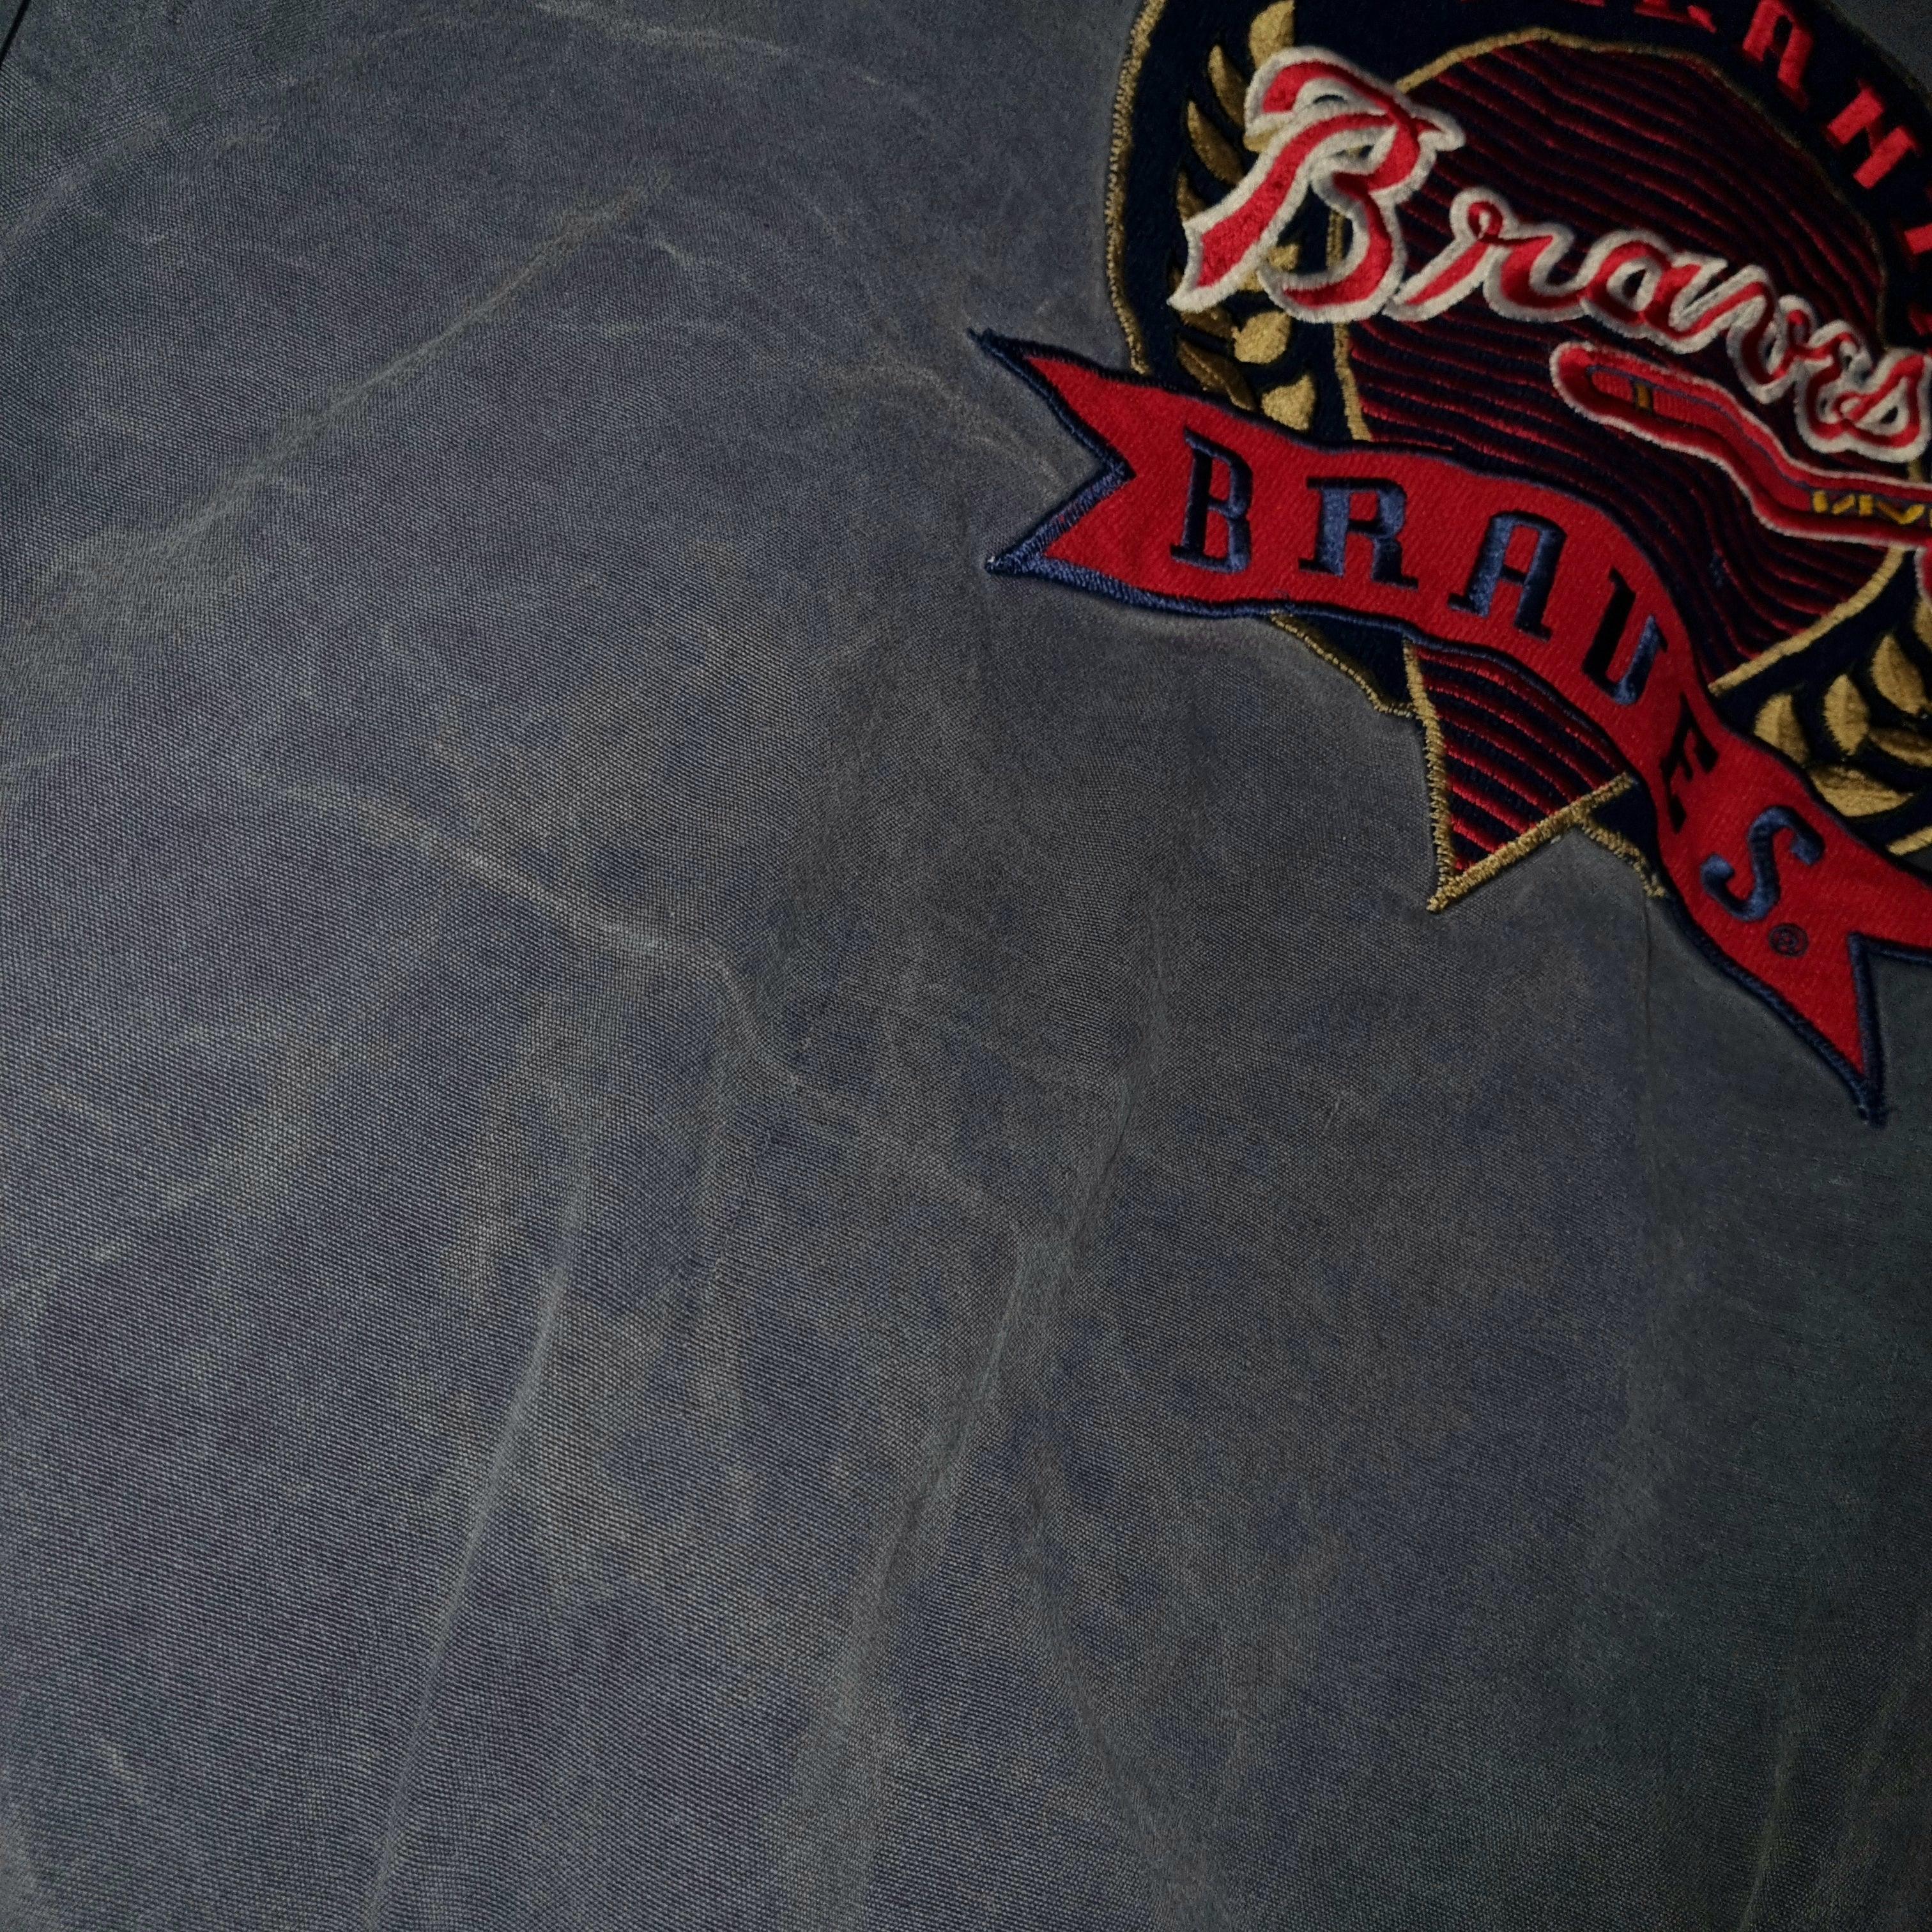 Bomber Atlanta Braves MLB vintage (L) - oldstyleclothing